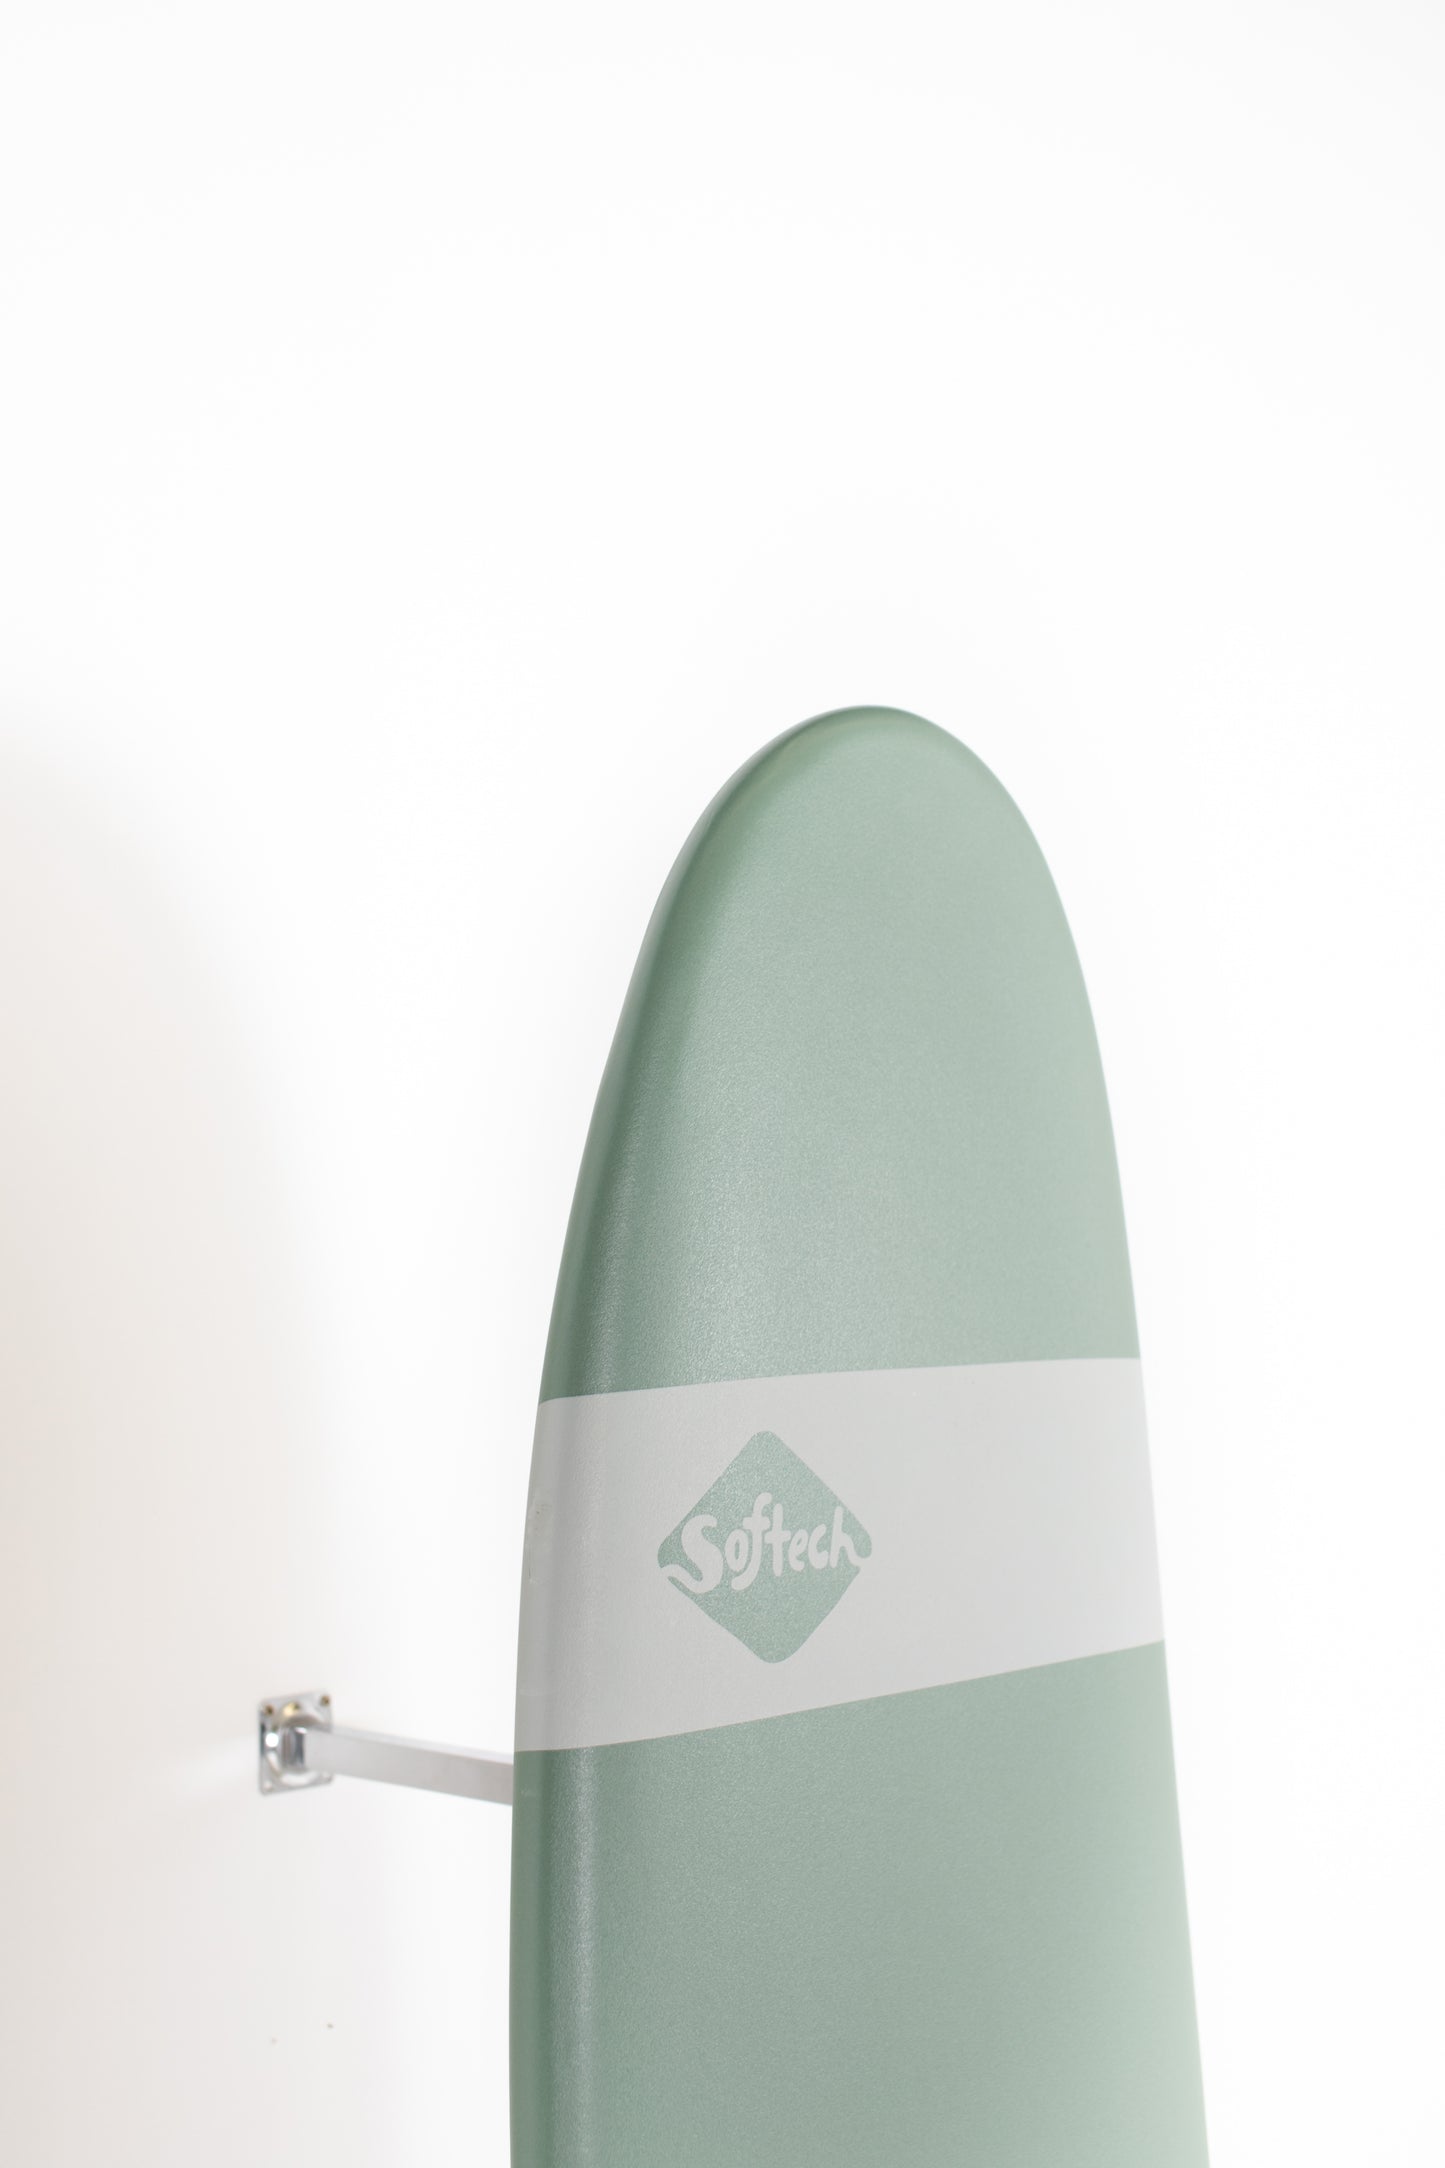 
                  
                    Pukas Surf Shop - SOFTECH - ROLLER 6.0
                  
                